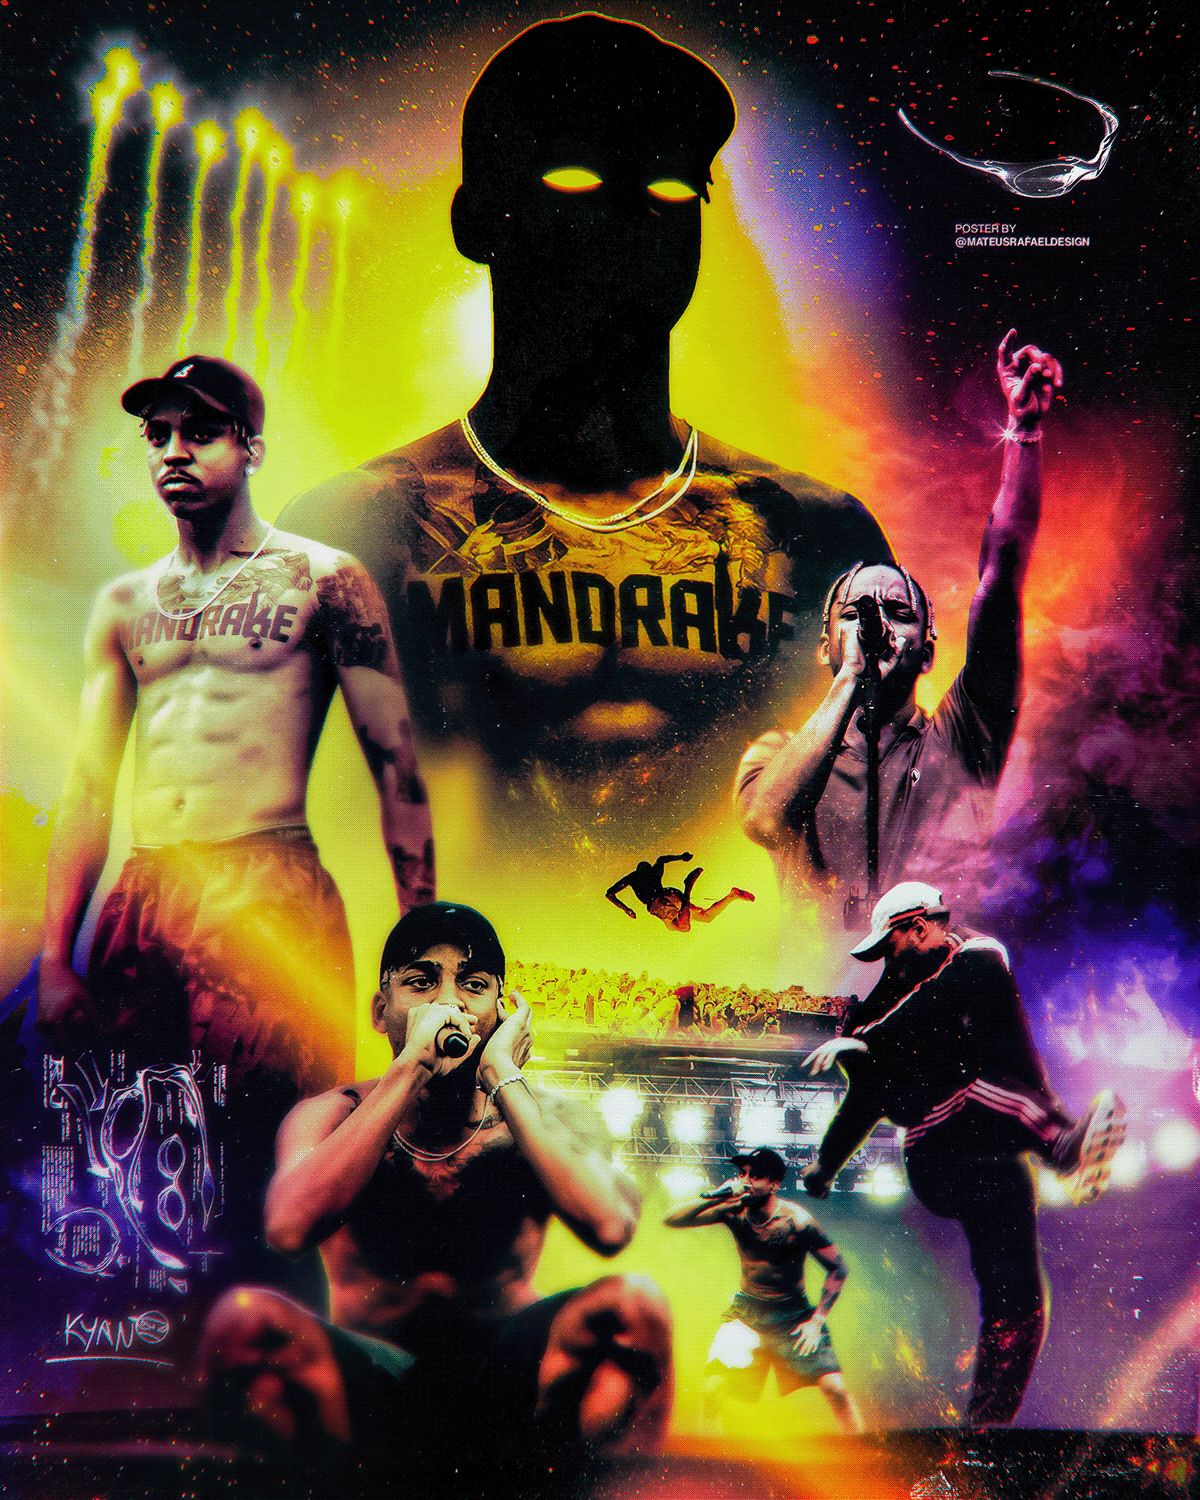 artistas 21 savage veigh Kyan trap kondzilla agenda Poster Design Flyer inspiration rap